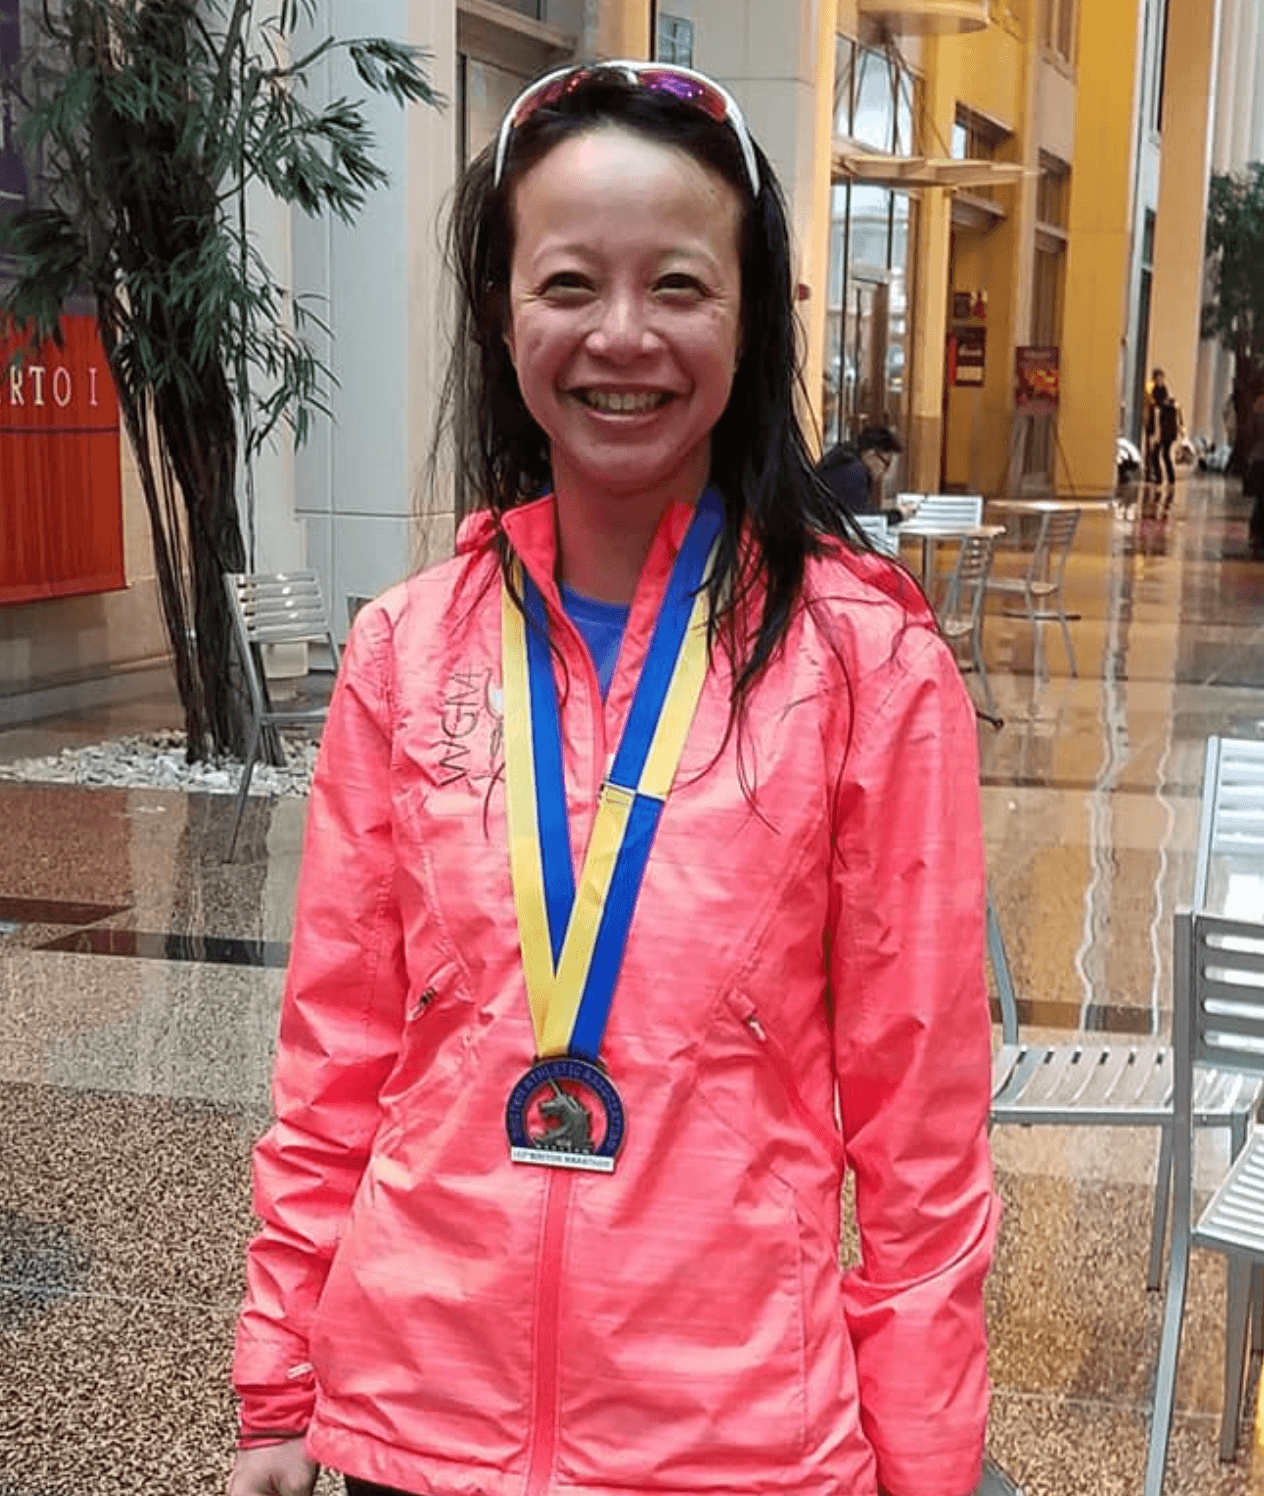 Tai Temple Boston Marathon Qualifier & Finisher